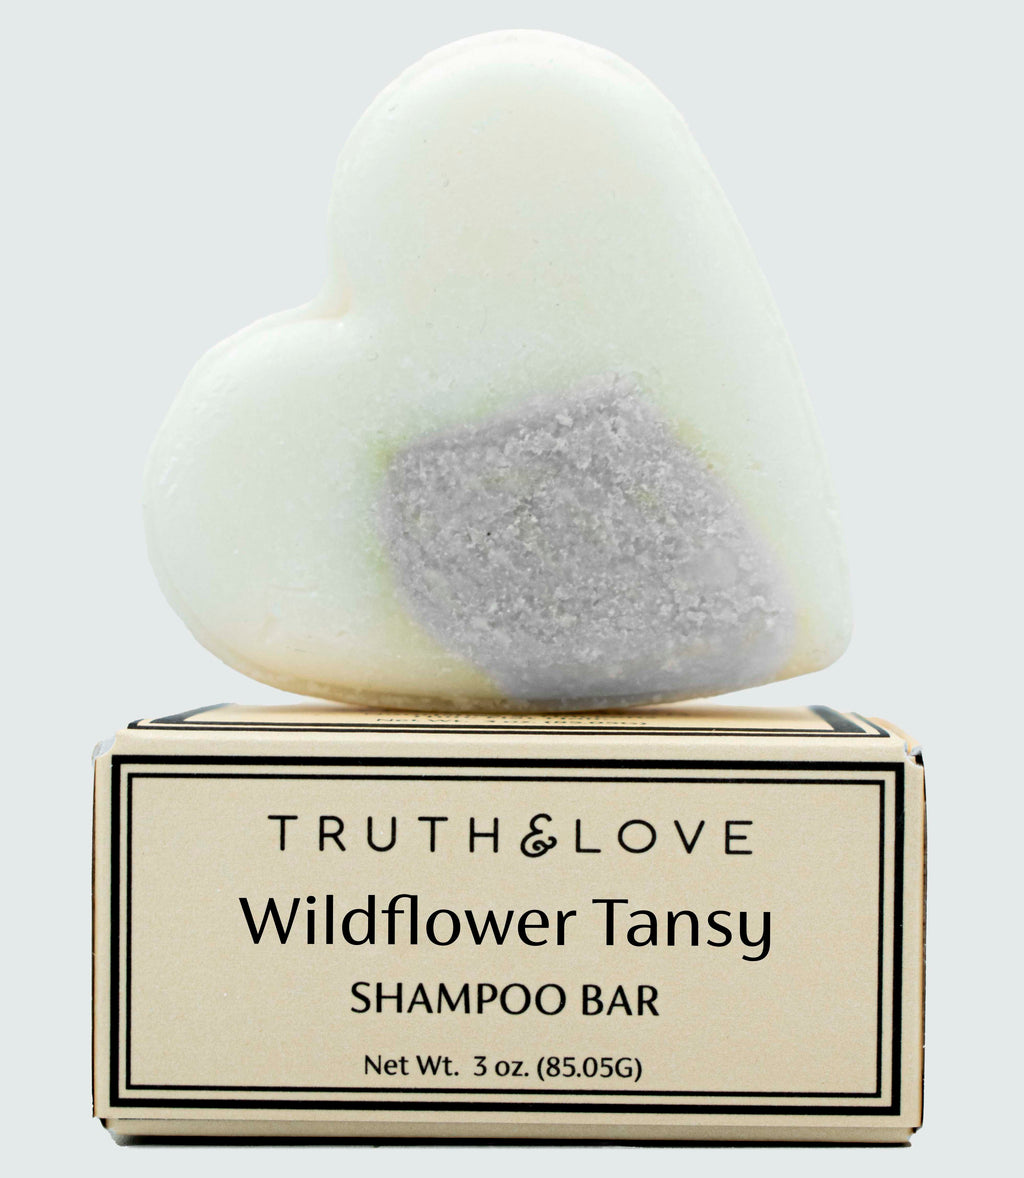 Wildflower Tansy Shampoo Bar